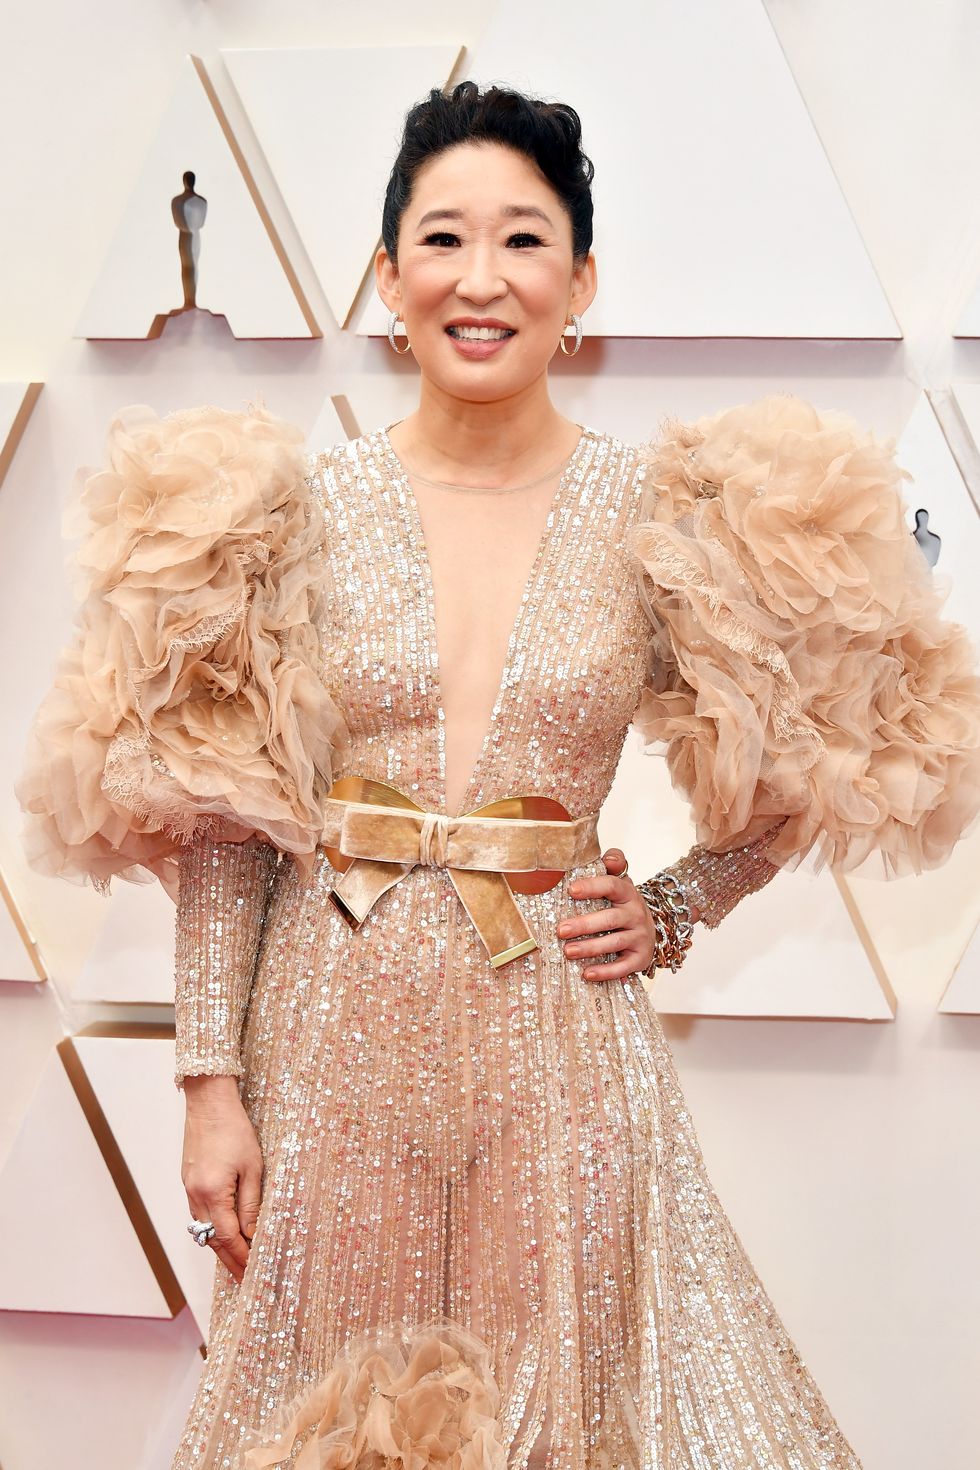 Oscars 2020: The secrets behind Florence Pugh's rare Louis Vuitton jewelry